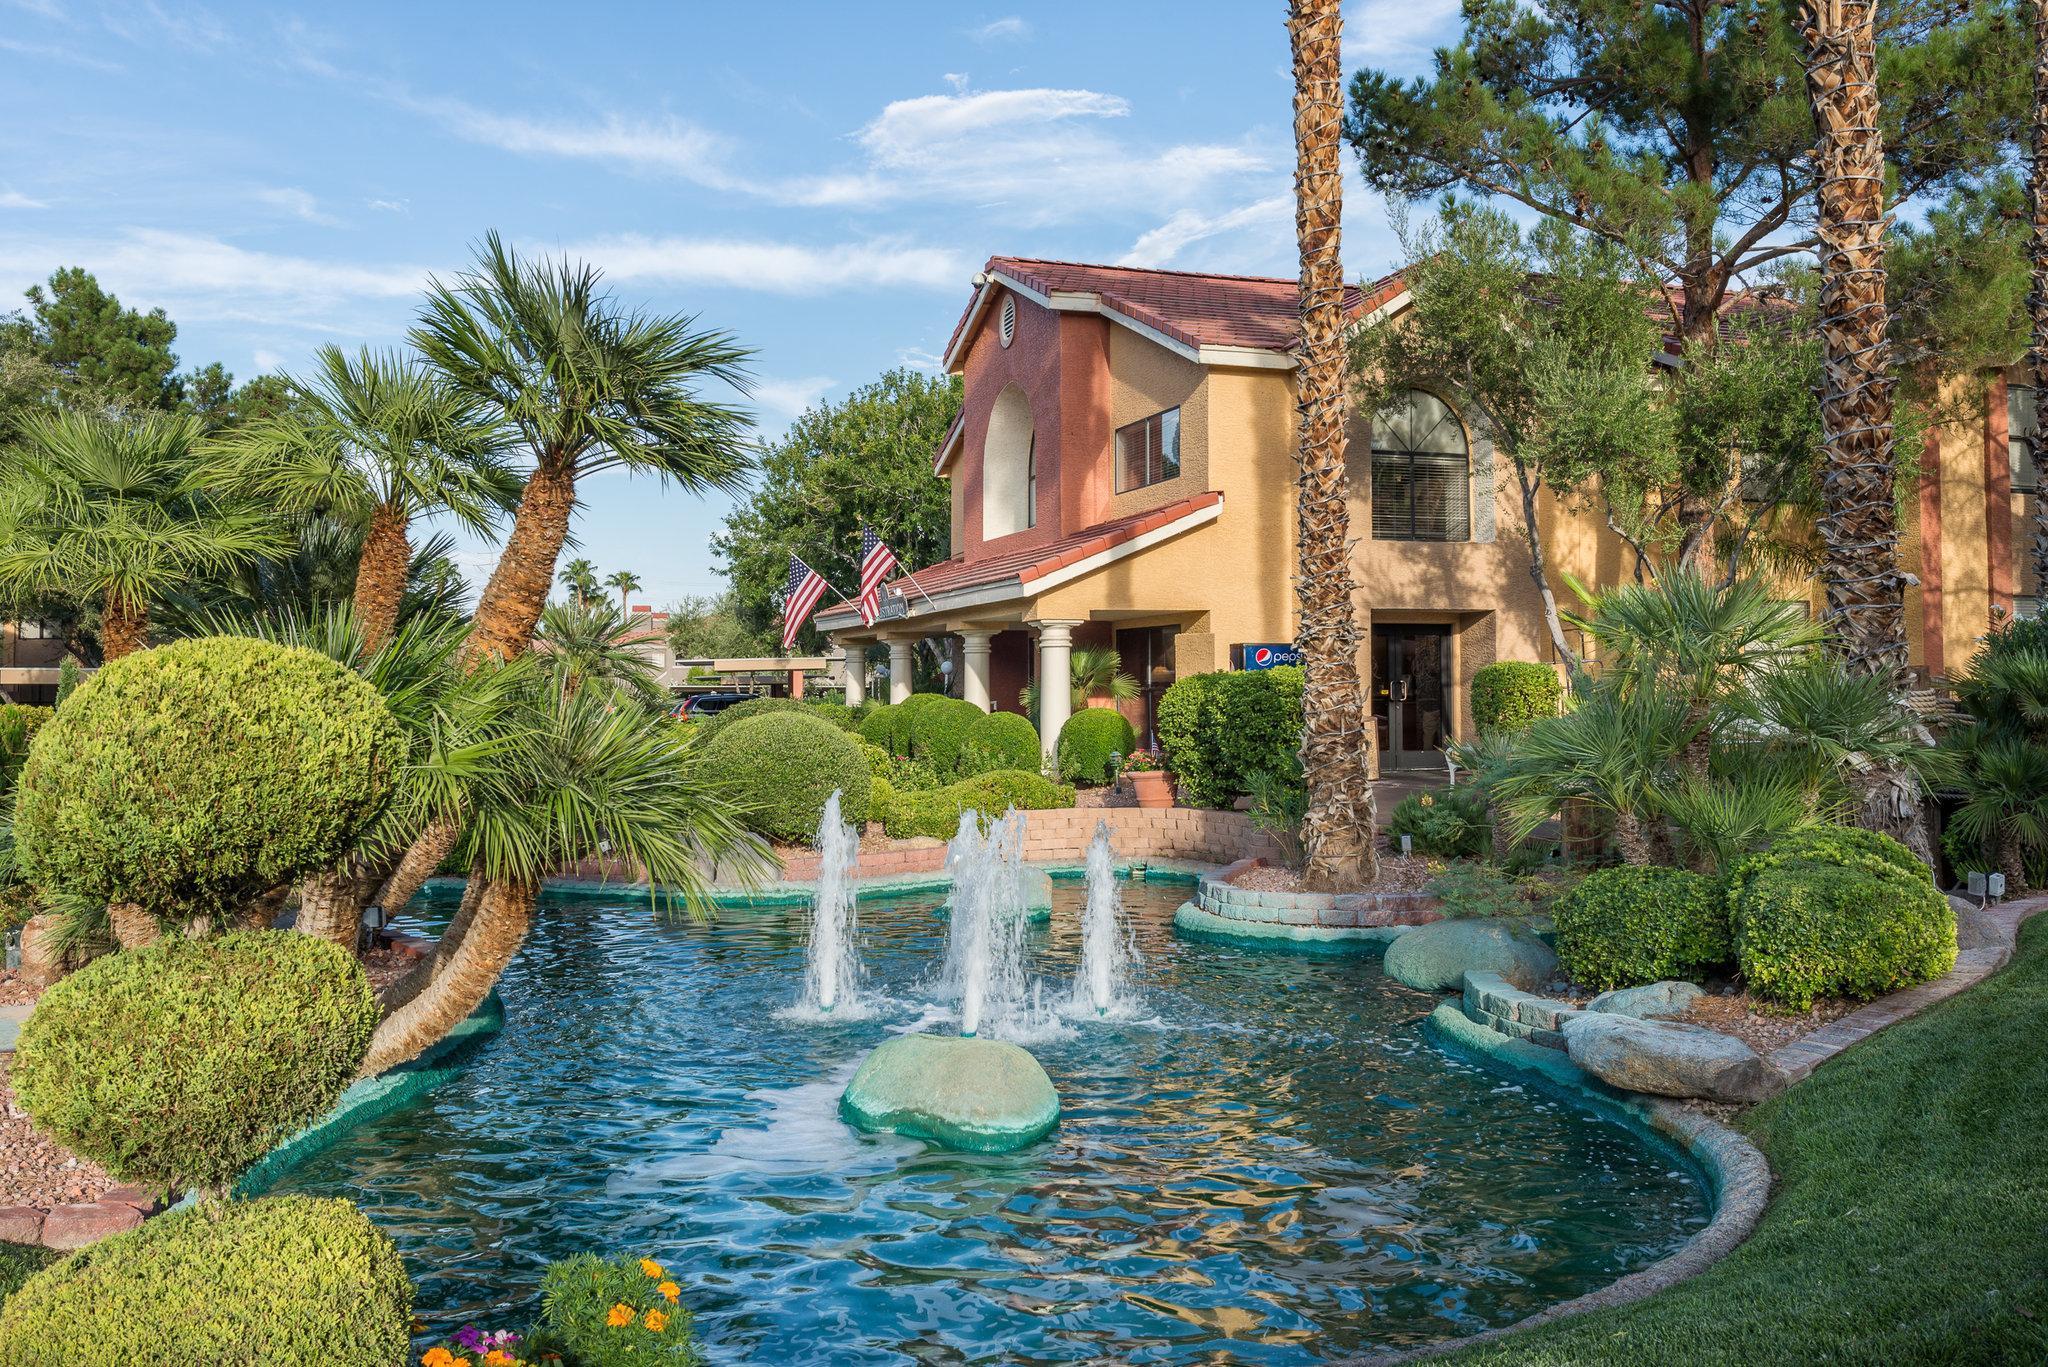 Westgate Flamingo Bay Resort Las Vegas Exterior photo